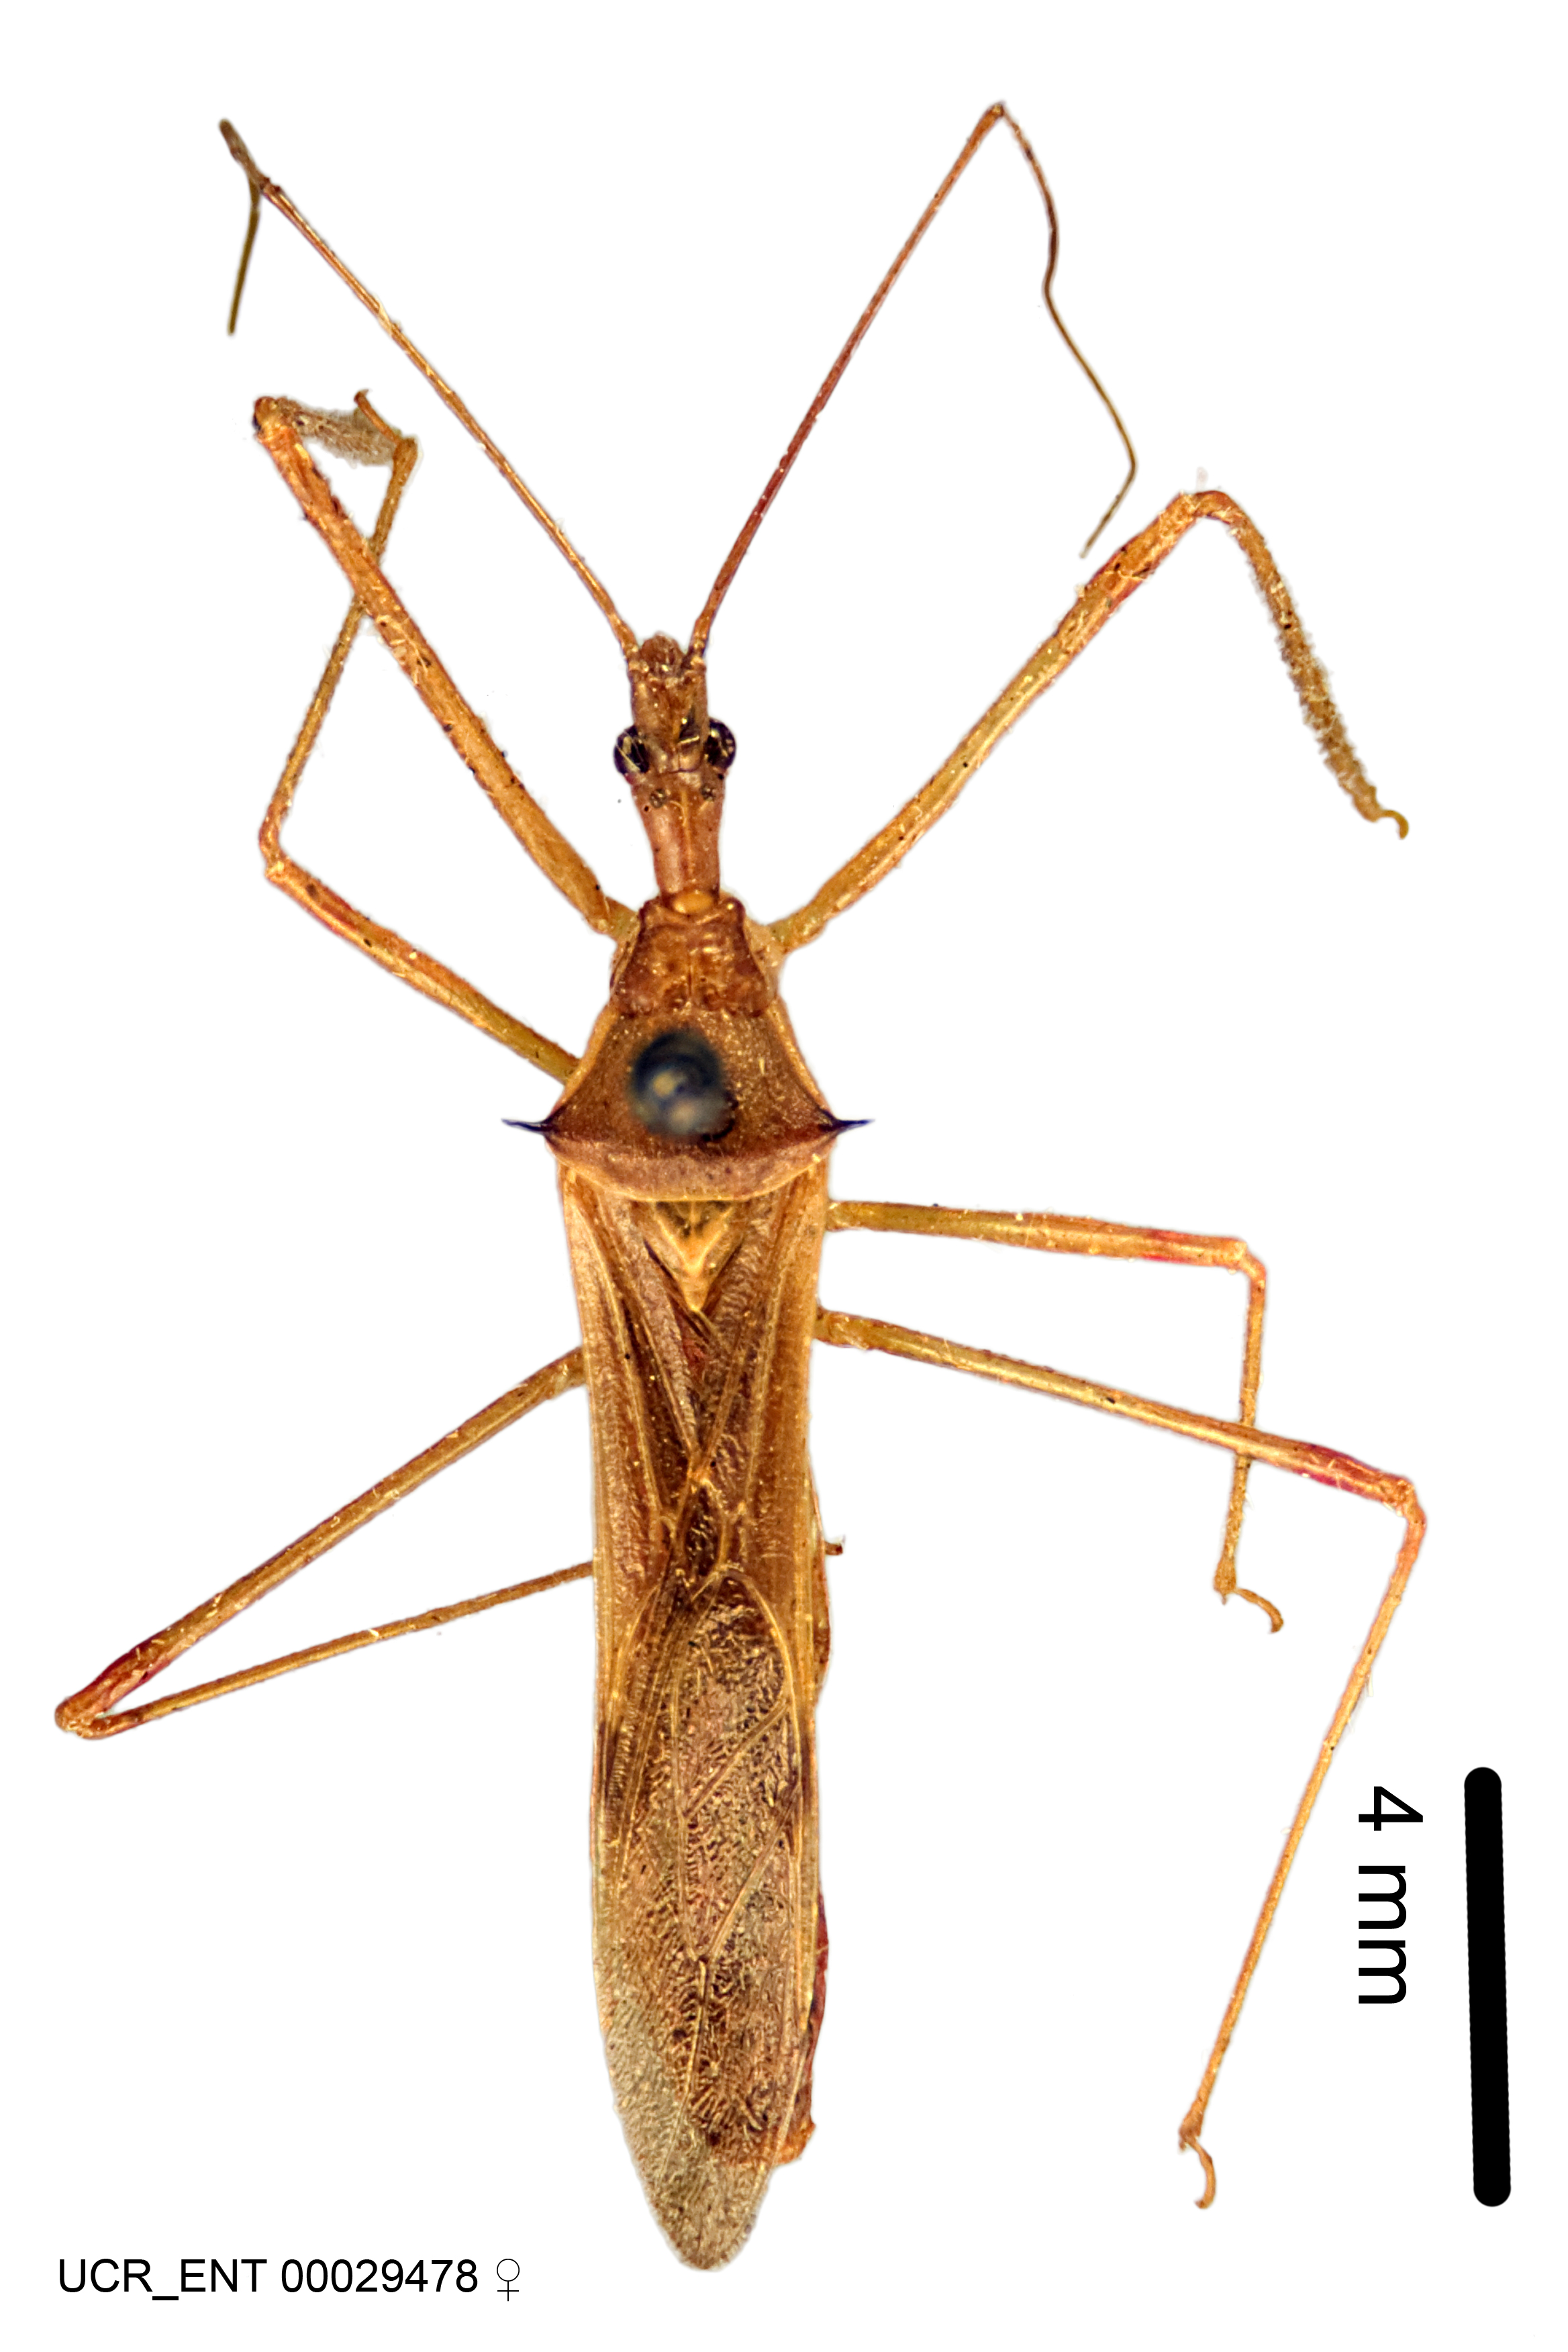 A taxonomic monograph of the assassin bug genus Zelus Fabricius 